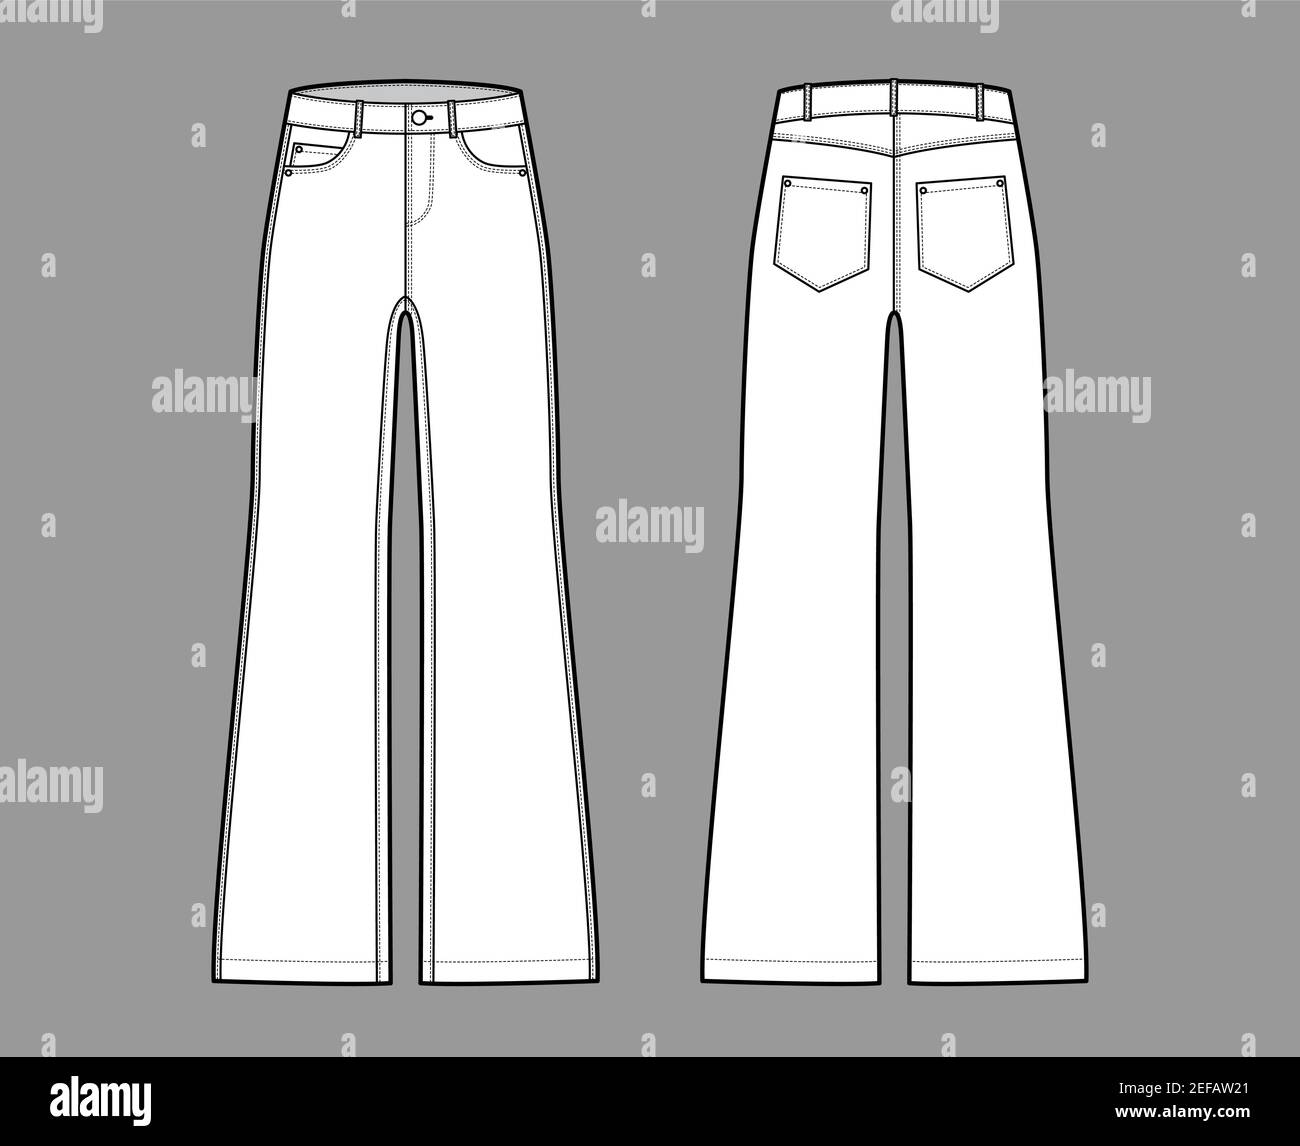 Set of Jeans wide leg Denim pants technical fashion illustration with low waist, rise, 5 pockets, Rivets, belt loops. Flat bottom template front, back, white color style. Women, men, unisex CAD mockup Stock Vector